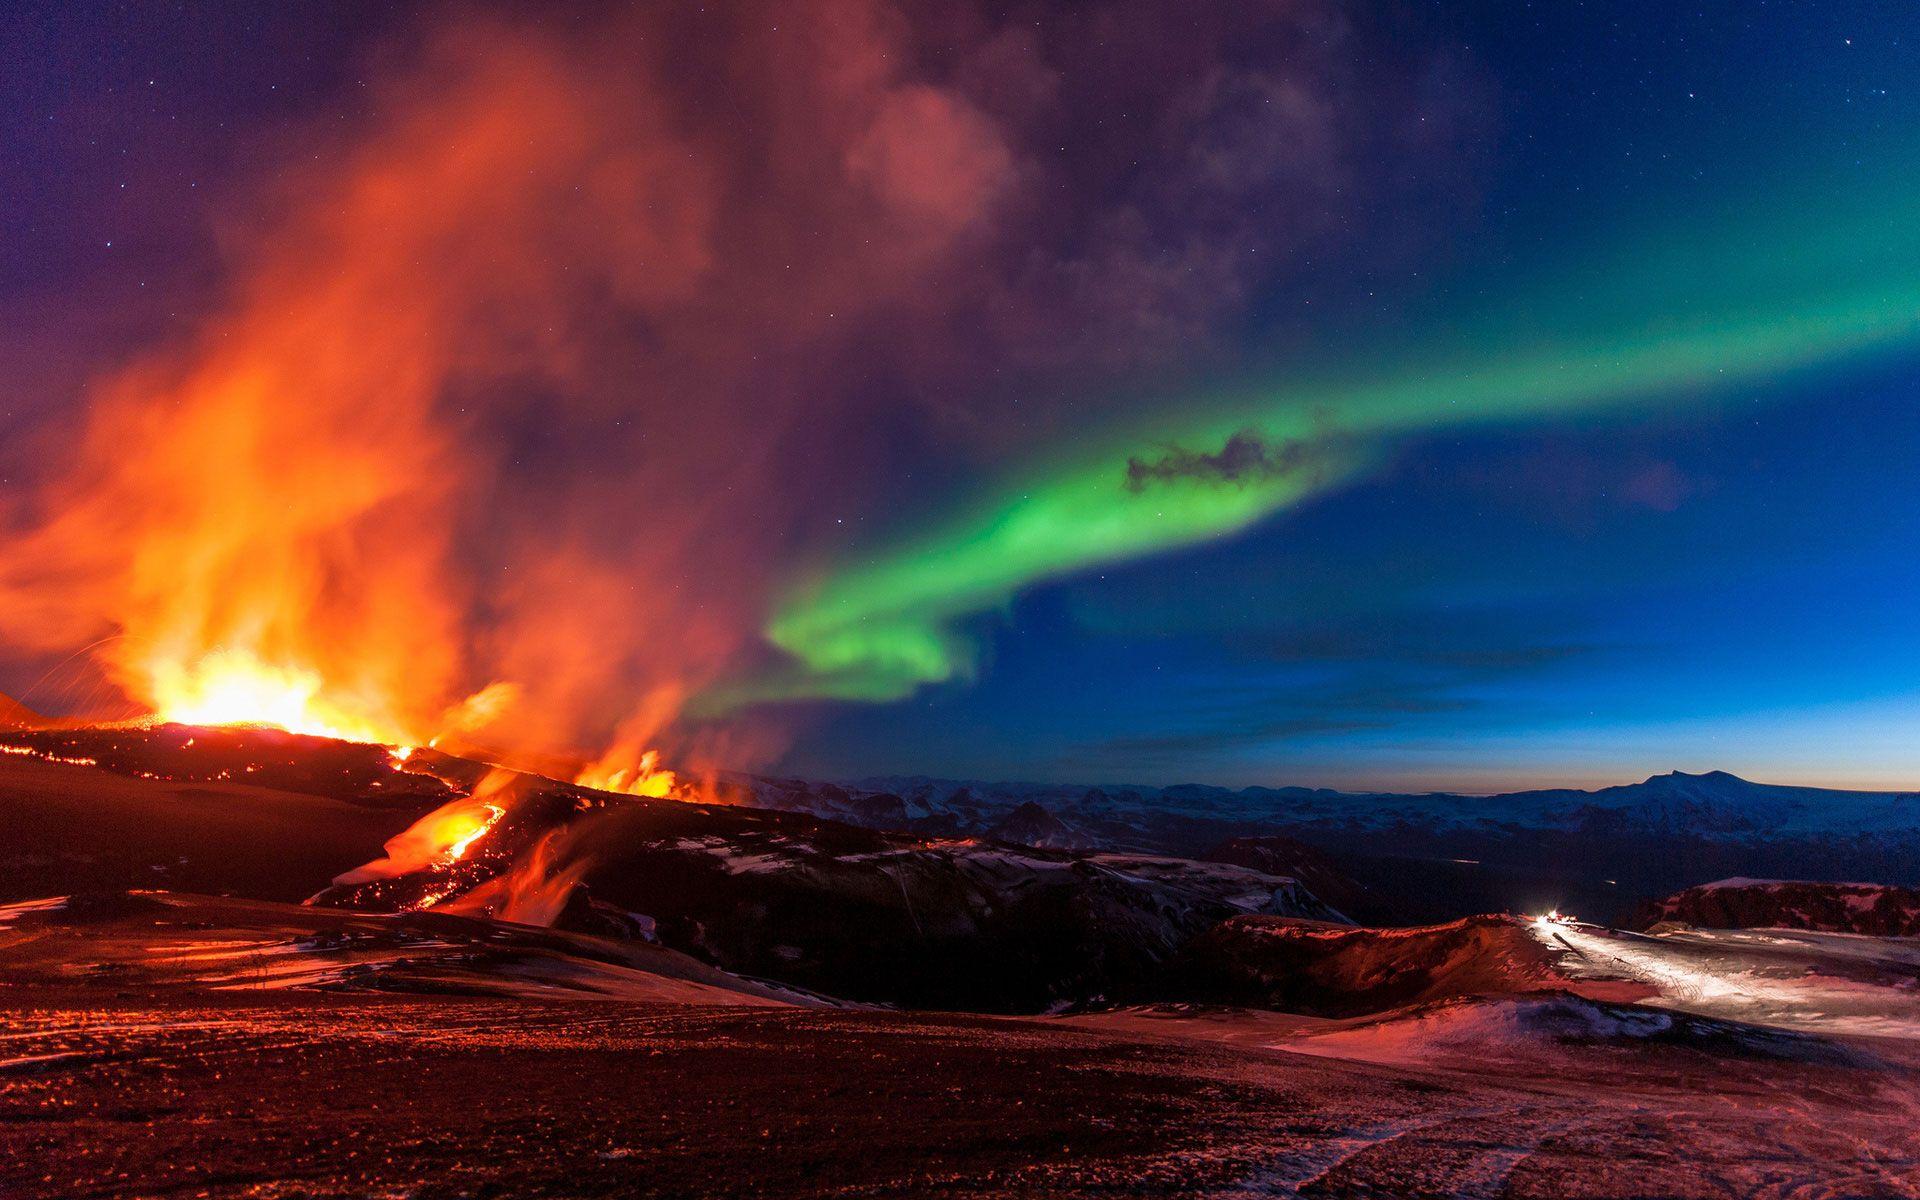 Photographer Maciej Winiarczyk captured the Bardarbunga volcano